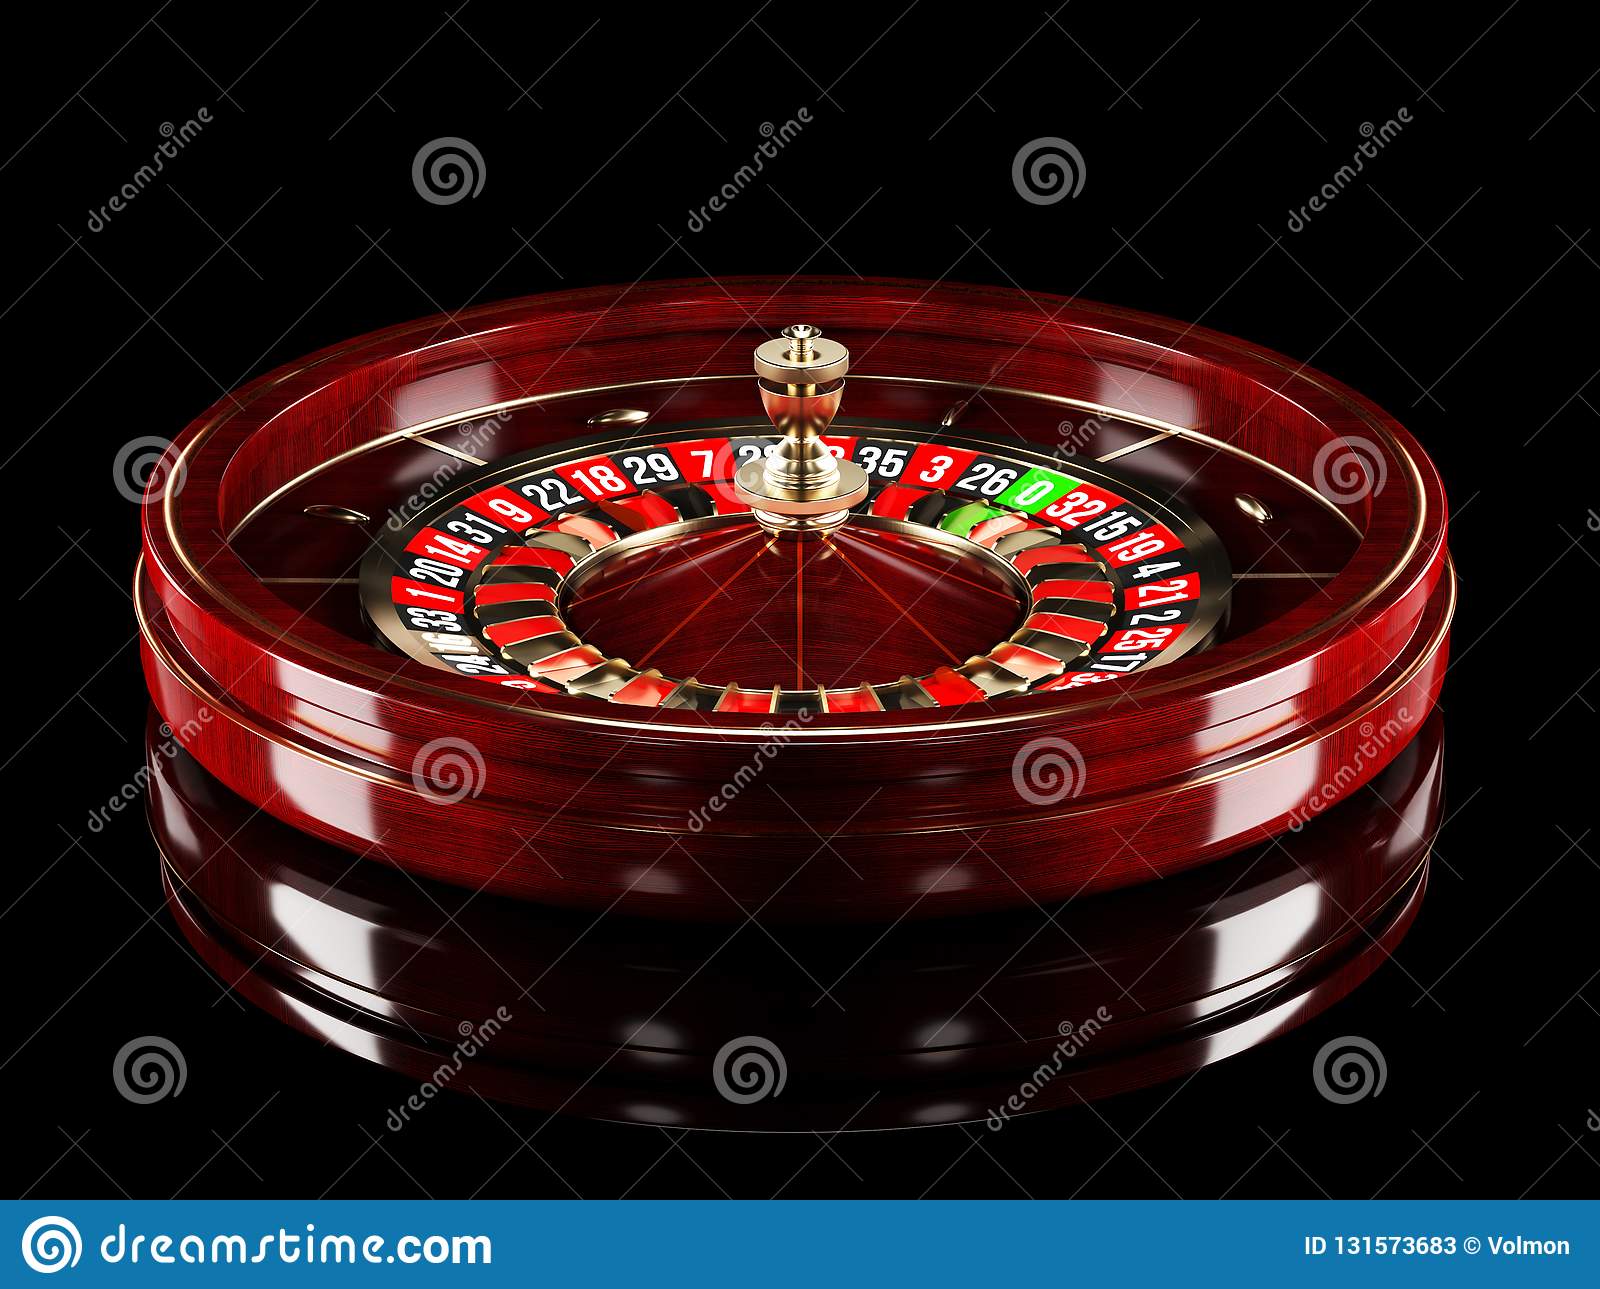 Casino online bitcoin 888 grátis